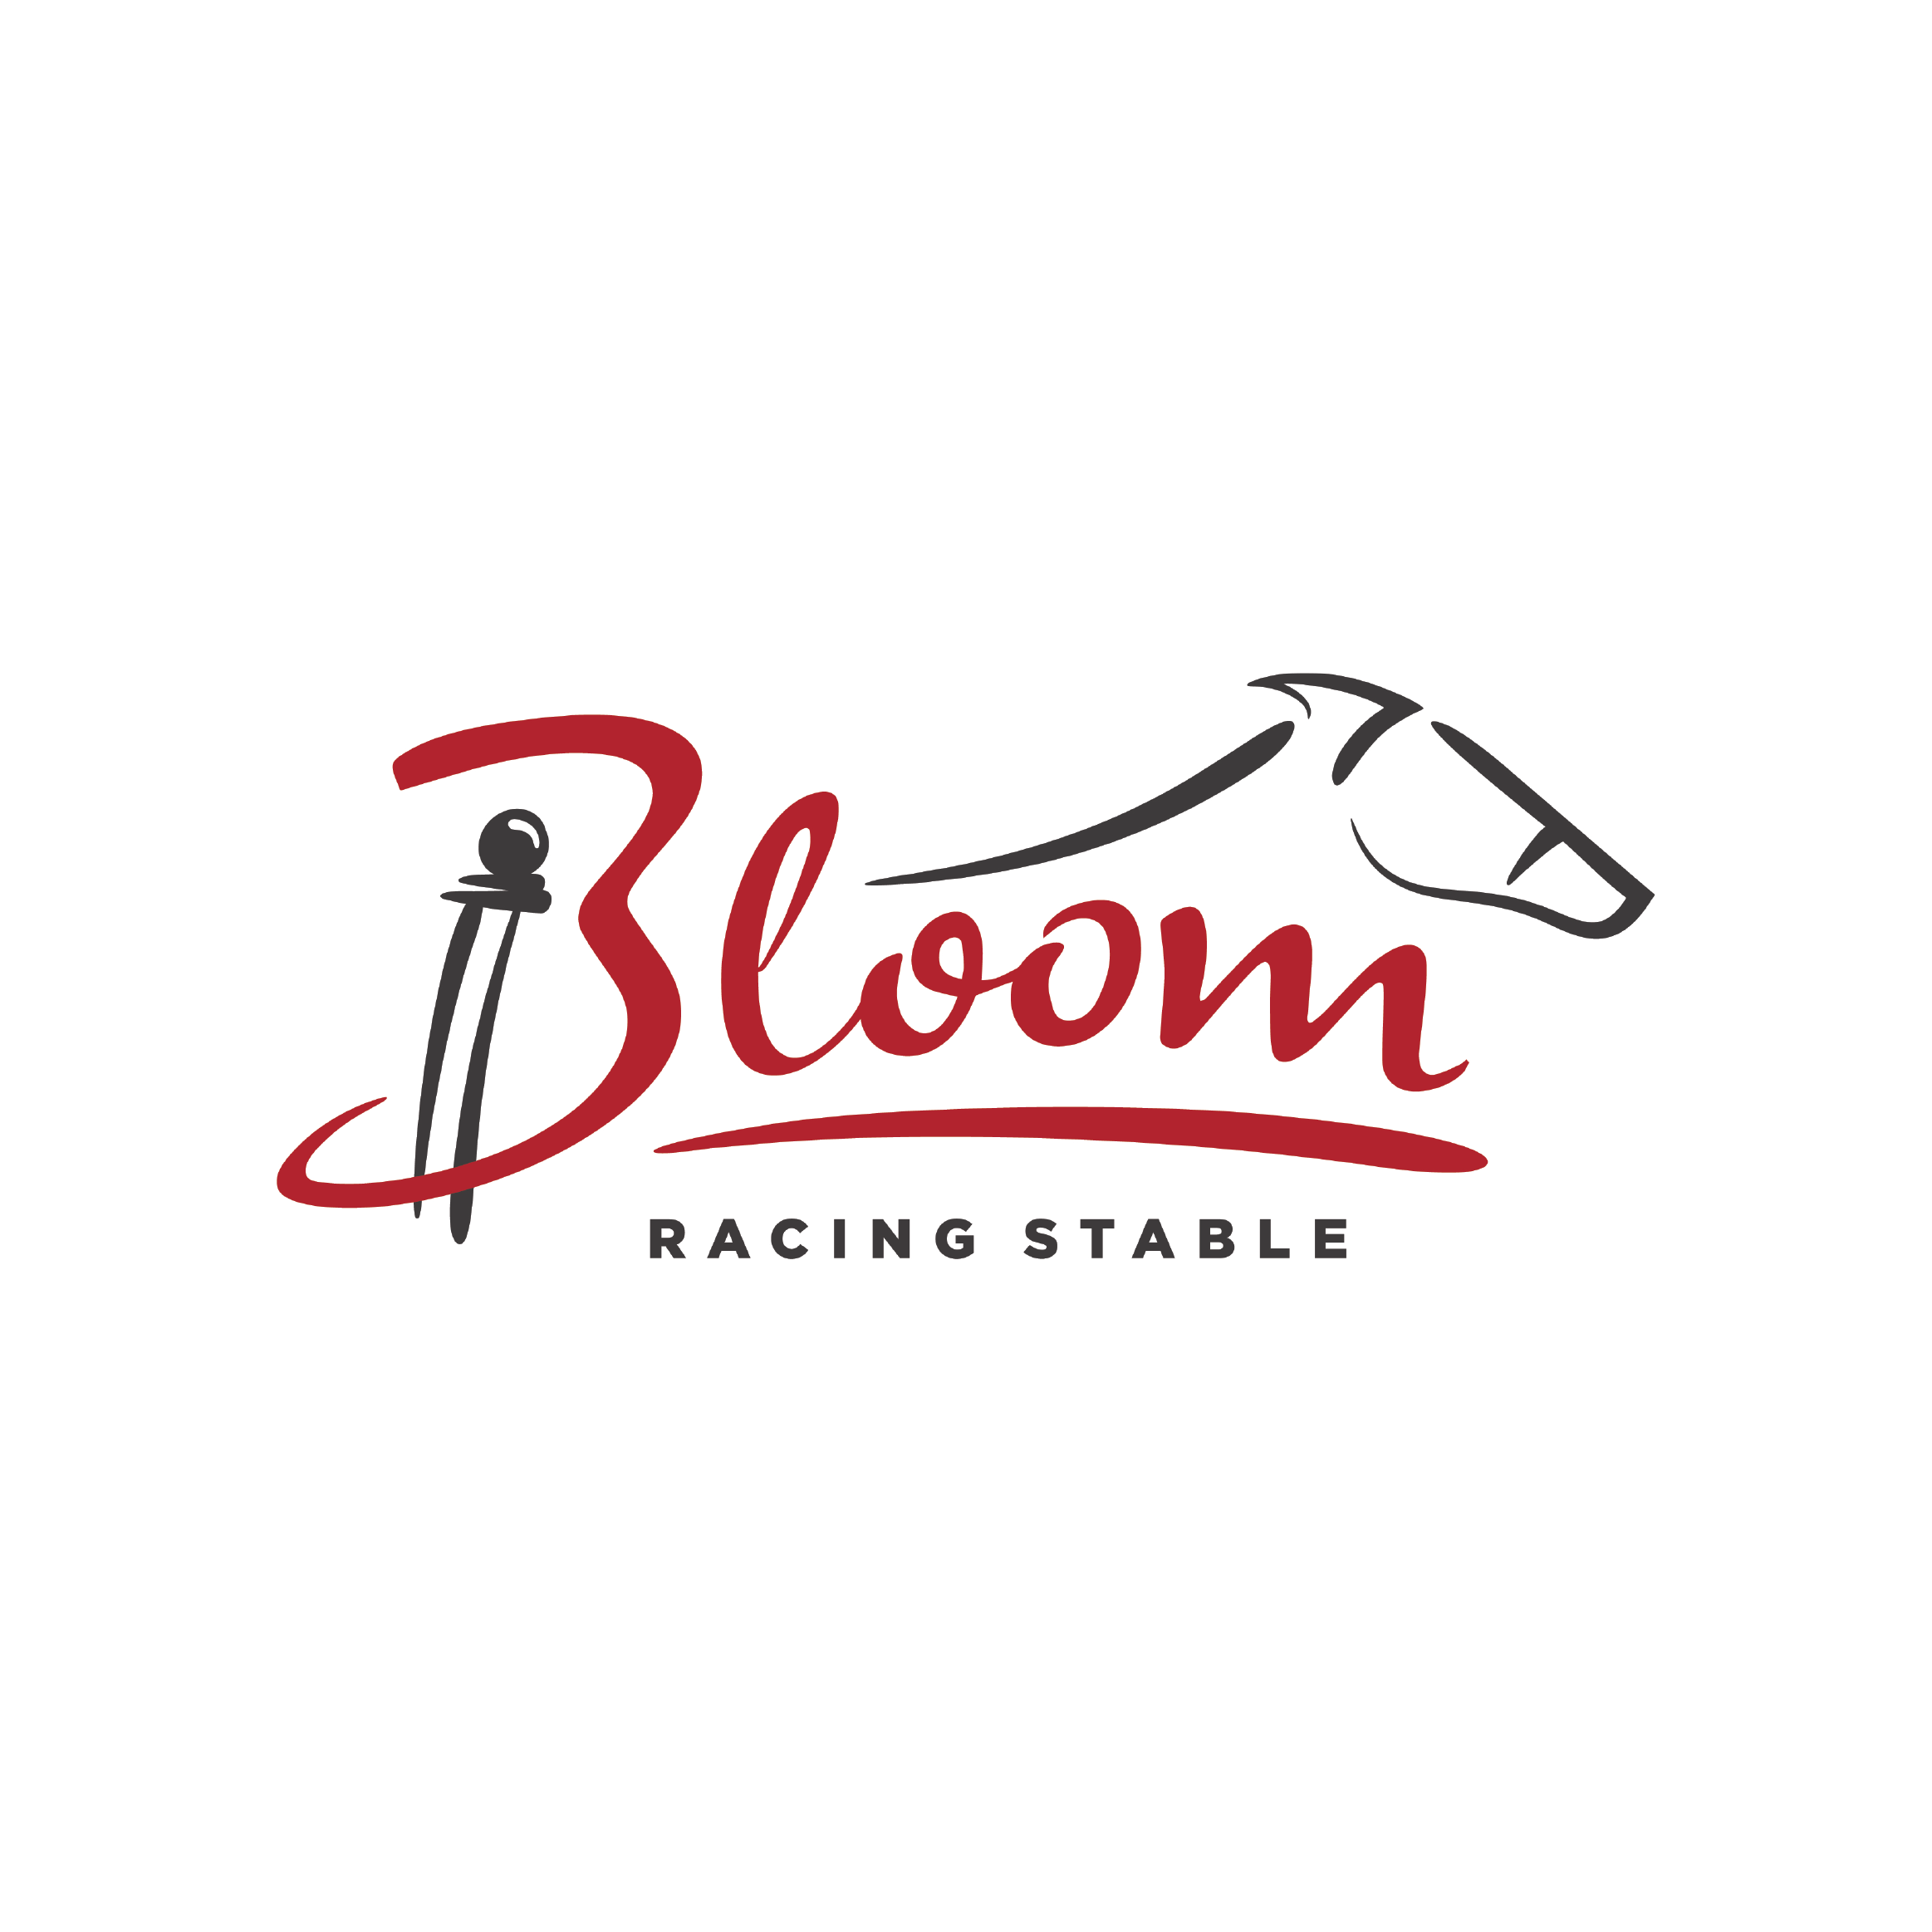 After logo - Bloom Racing Stable rebranding